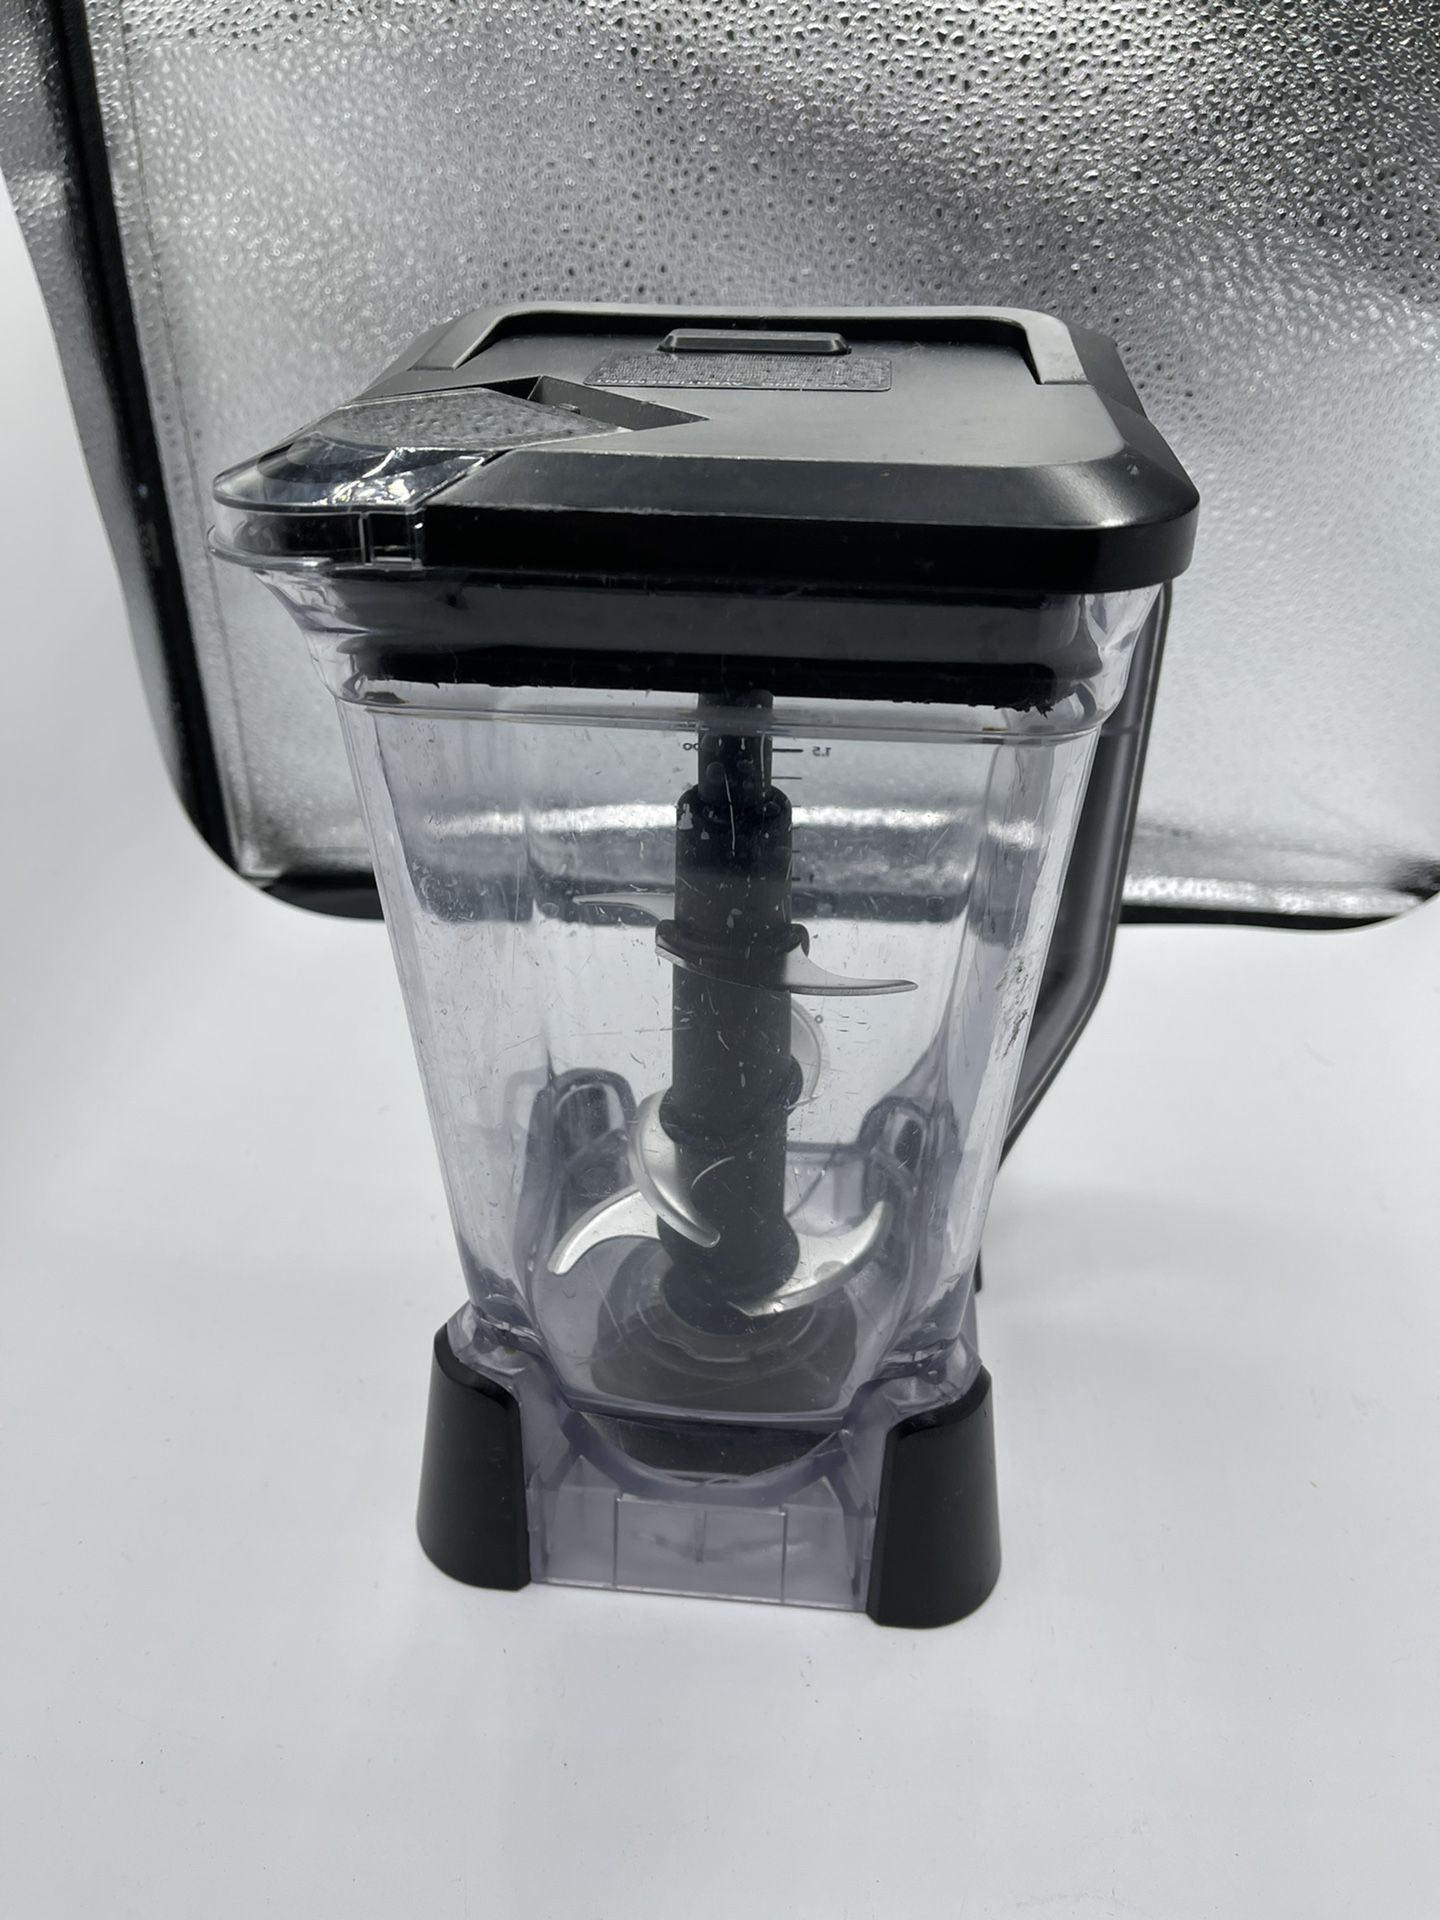 Ninja Nutri Blender BN300 700-Watt Personal Blender, 2 20 oz  Dishwasher-Safe To-Go Cups for Sale in Heathrow, FL - OfferUp